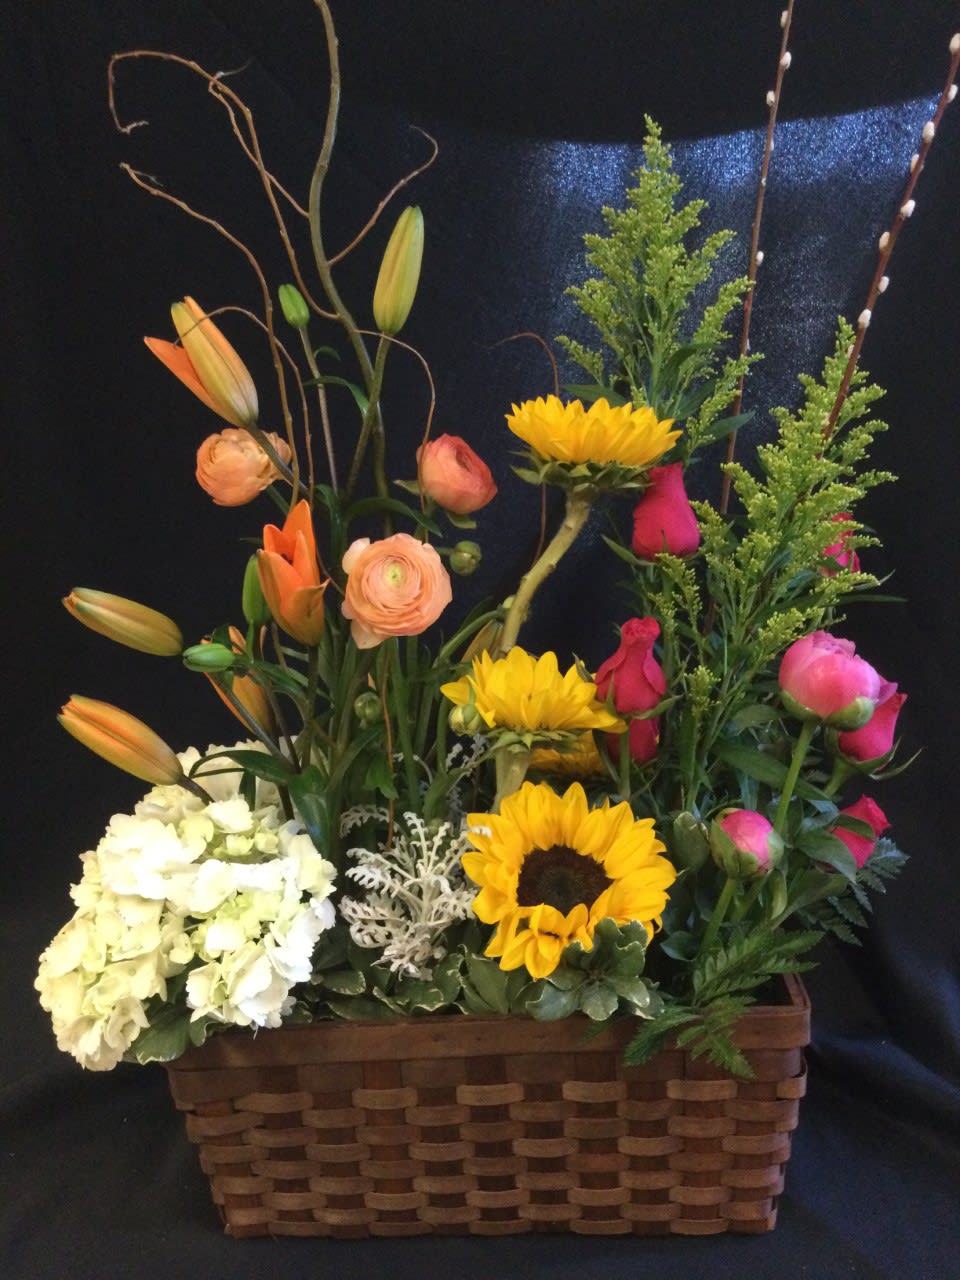 Bright garden in a box - Bright color seasonal cut flowers in a window box